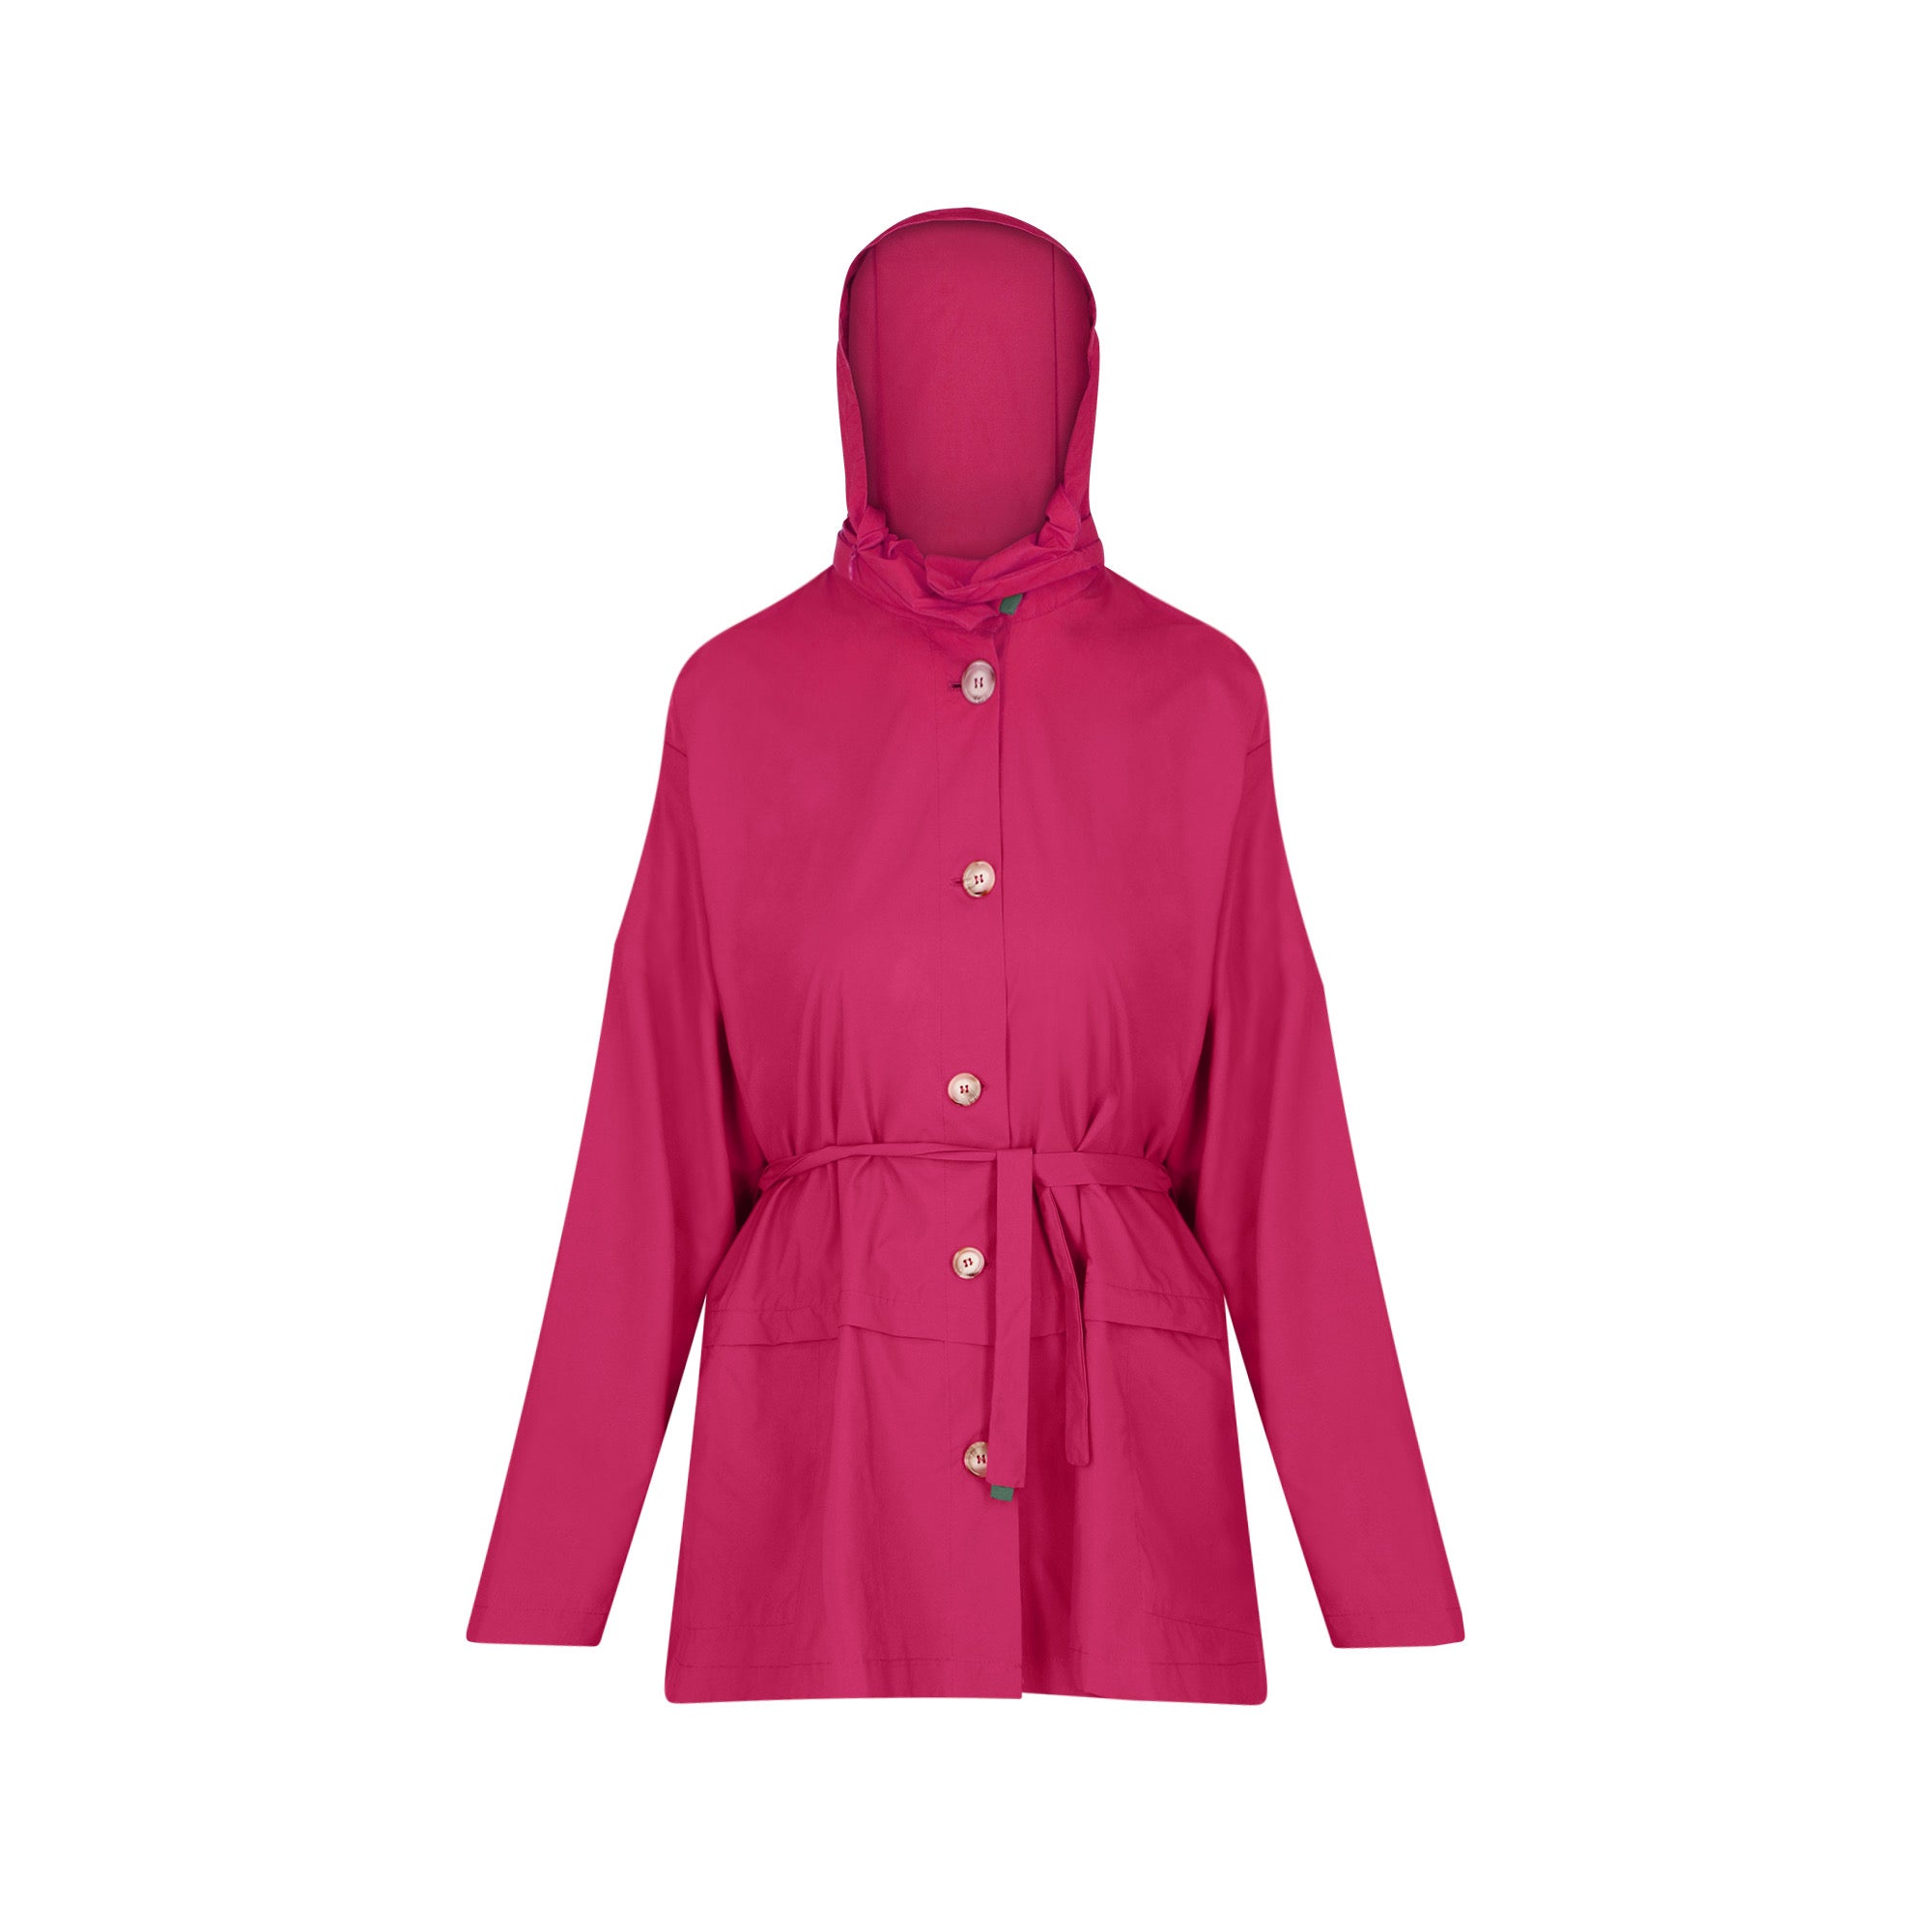 Bise raincoat - Cherry color - front view